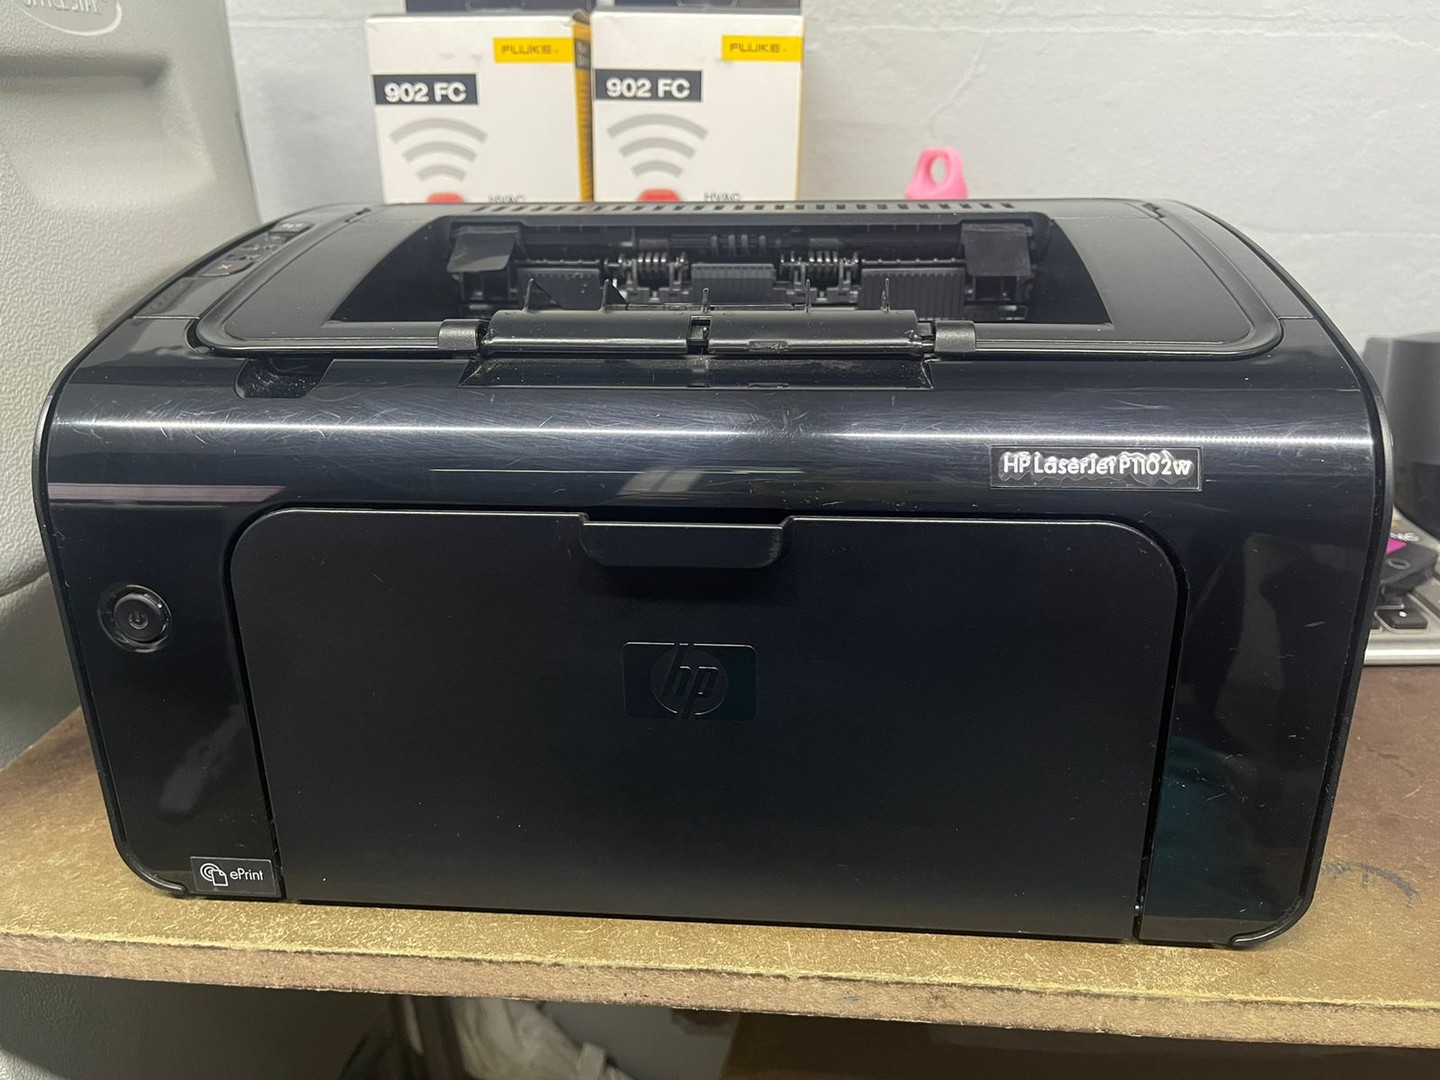 impresoras y scanners - Printer impresora Hp LaserJet P1102w
 3